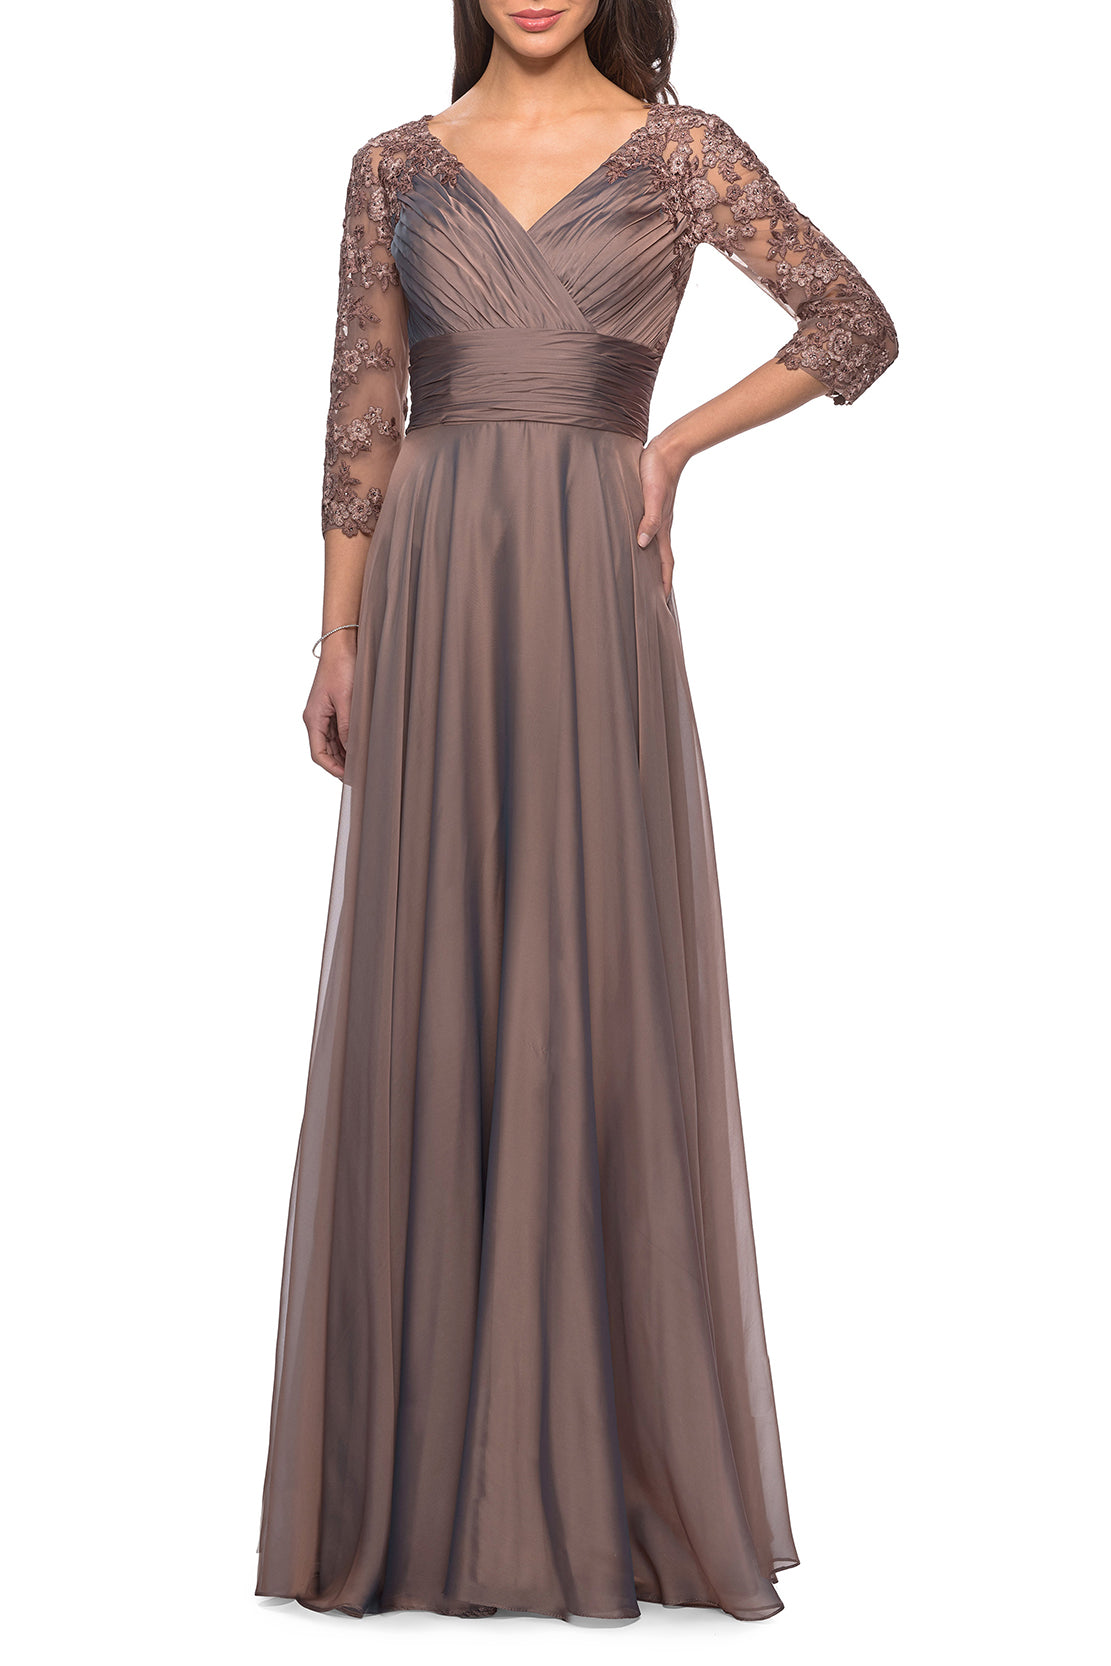 La Femme Mother of the Bride Style 27153 – Instant Dress